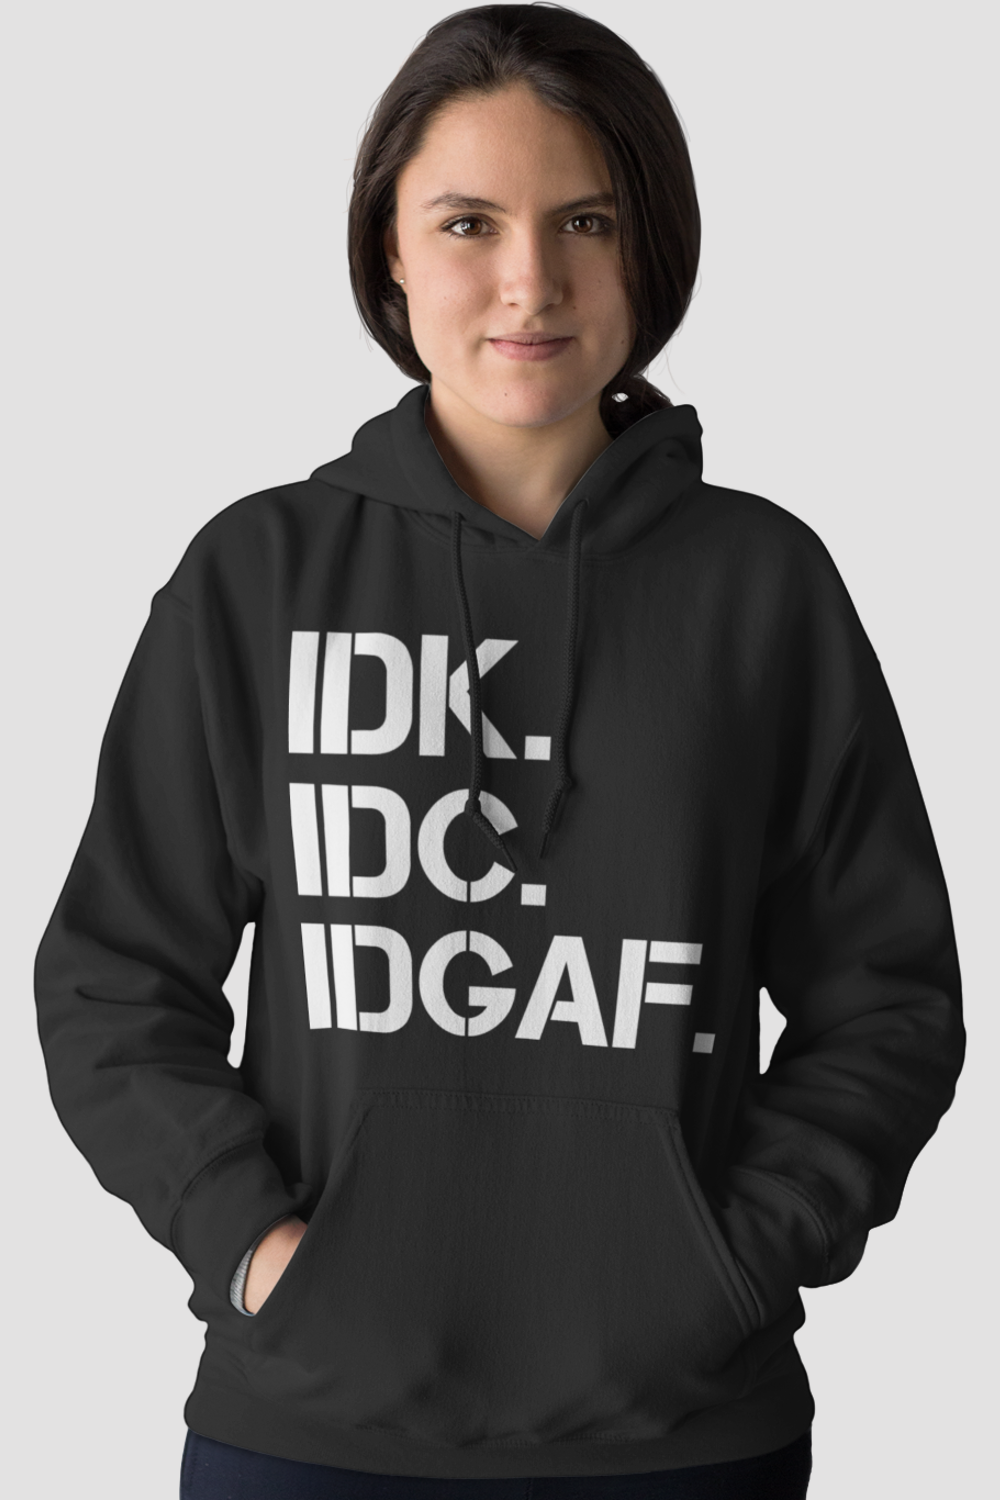 IDK IDC IDGAF Women's Classic Hoodie